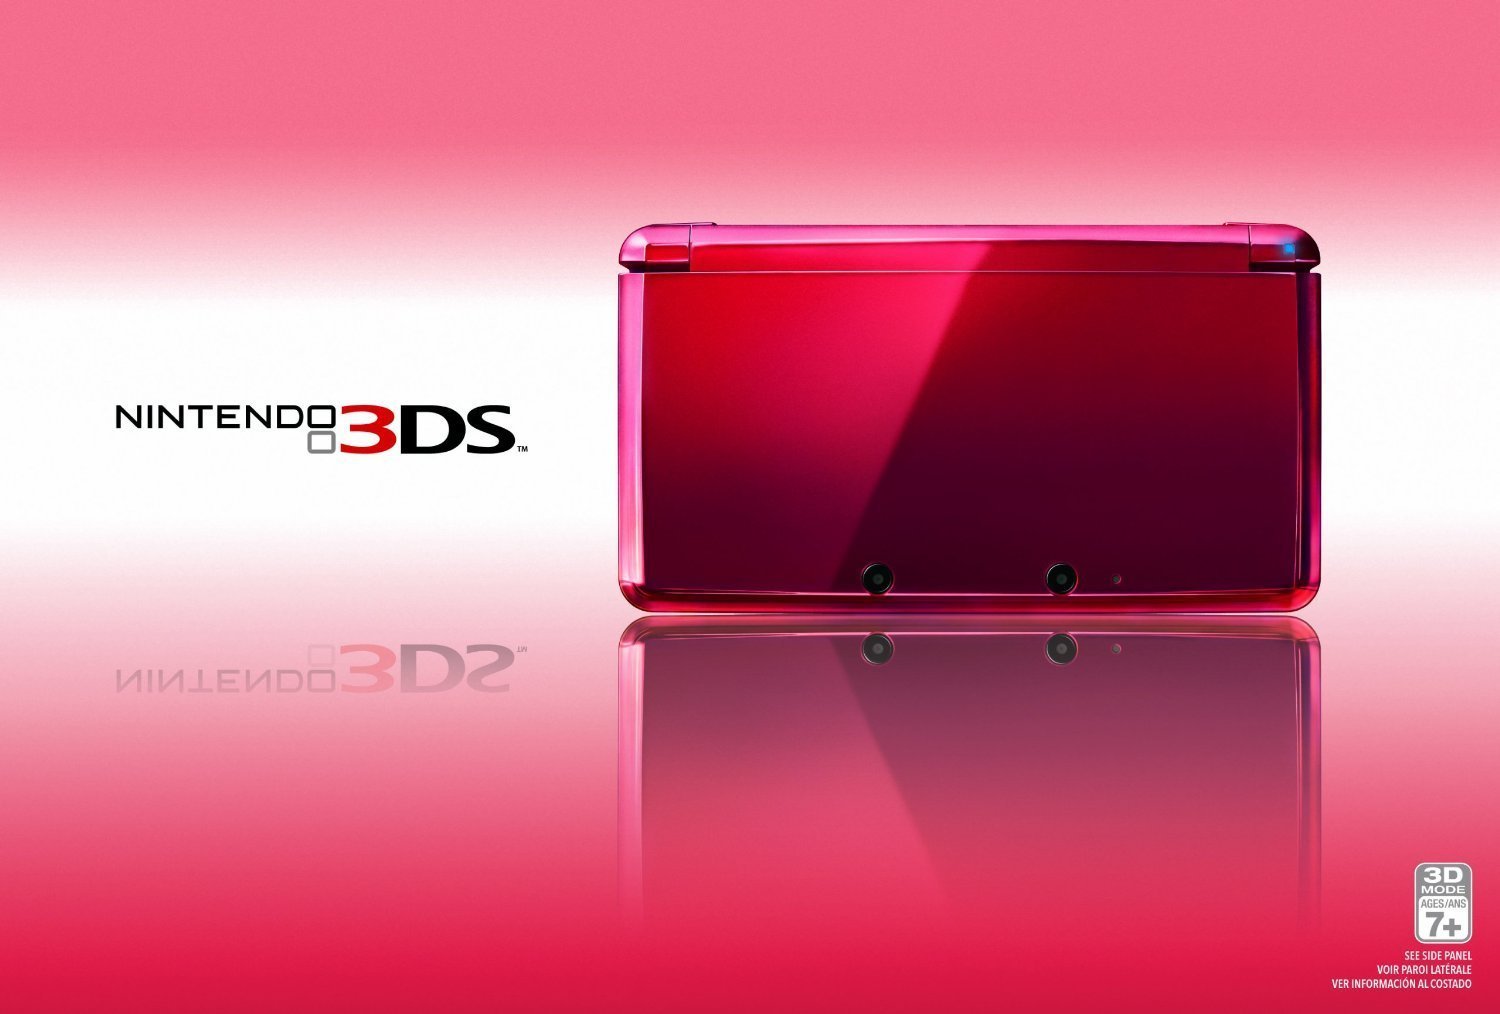 Nintendo 3DS Handheld System - Flame Red (Renewed)